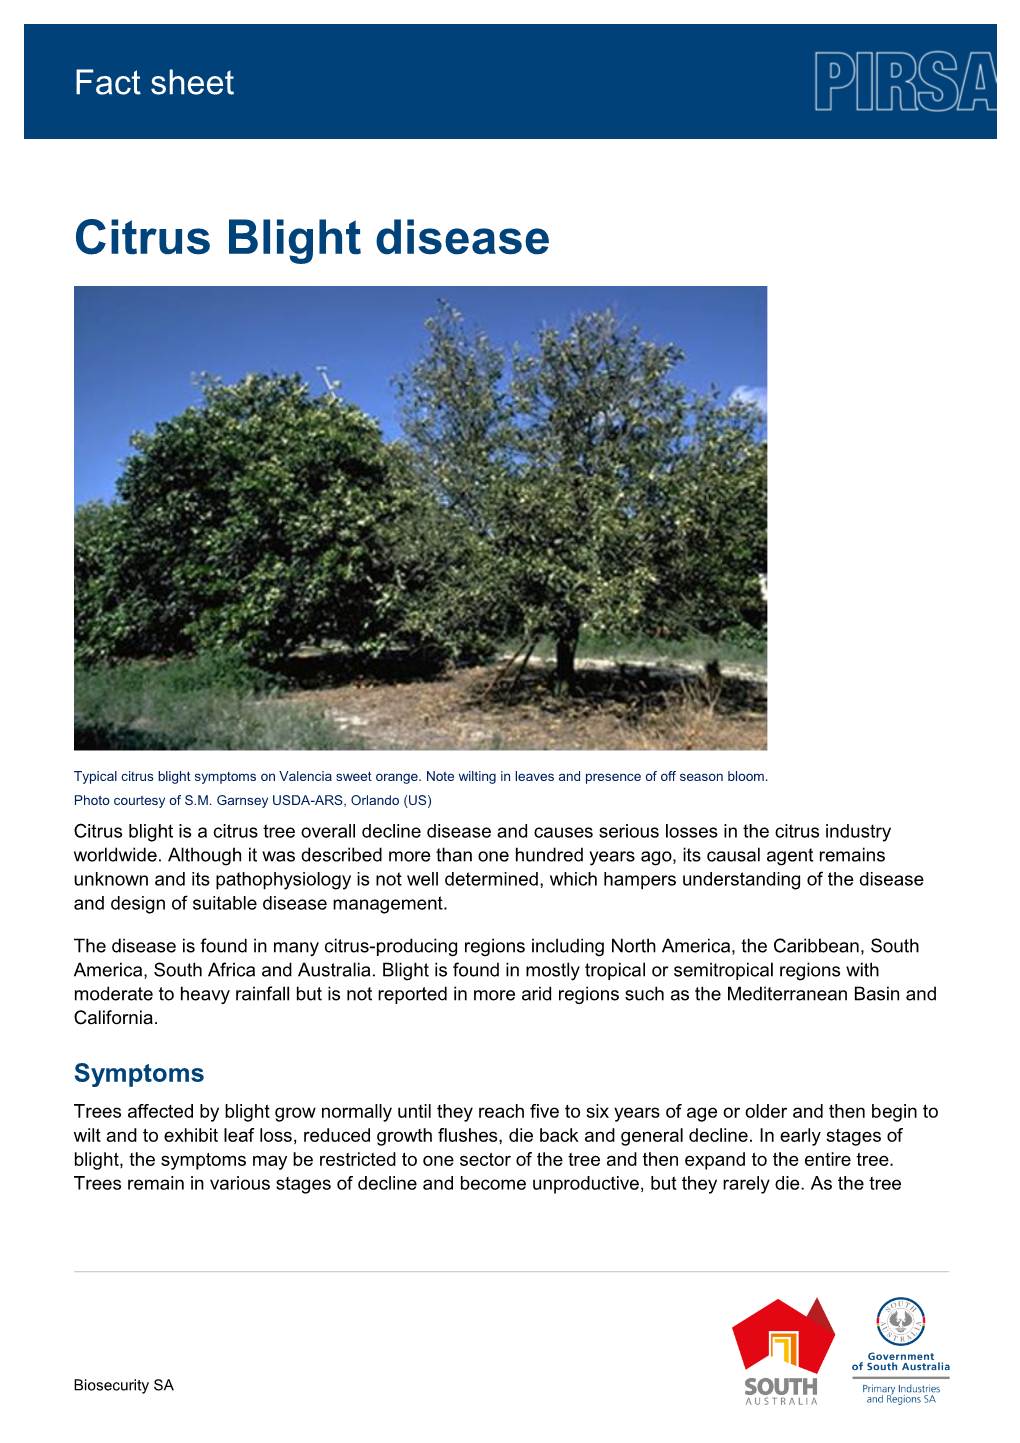 Citrus Blight Disease